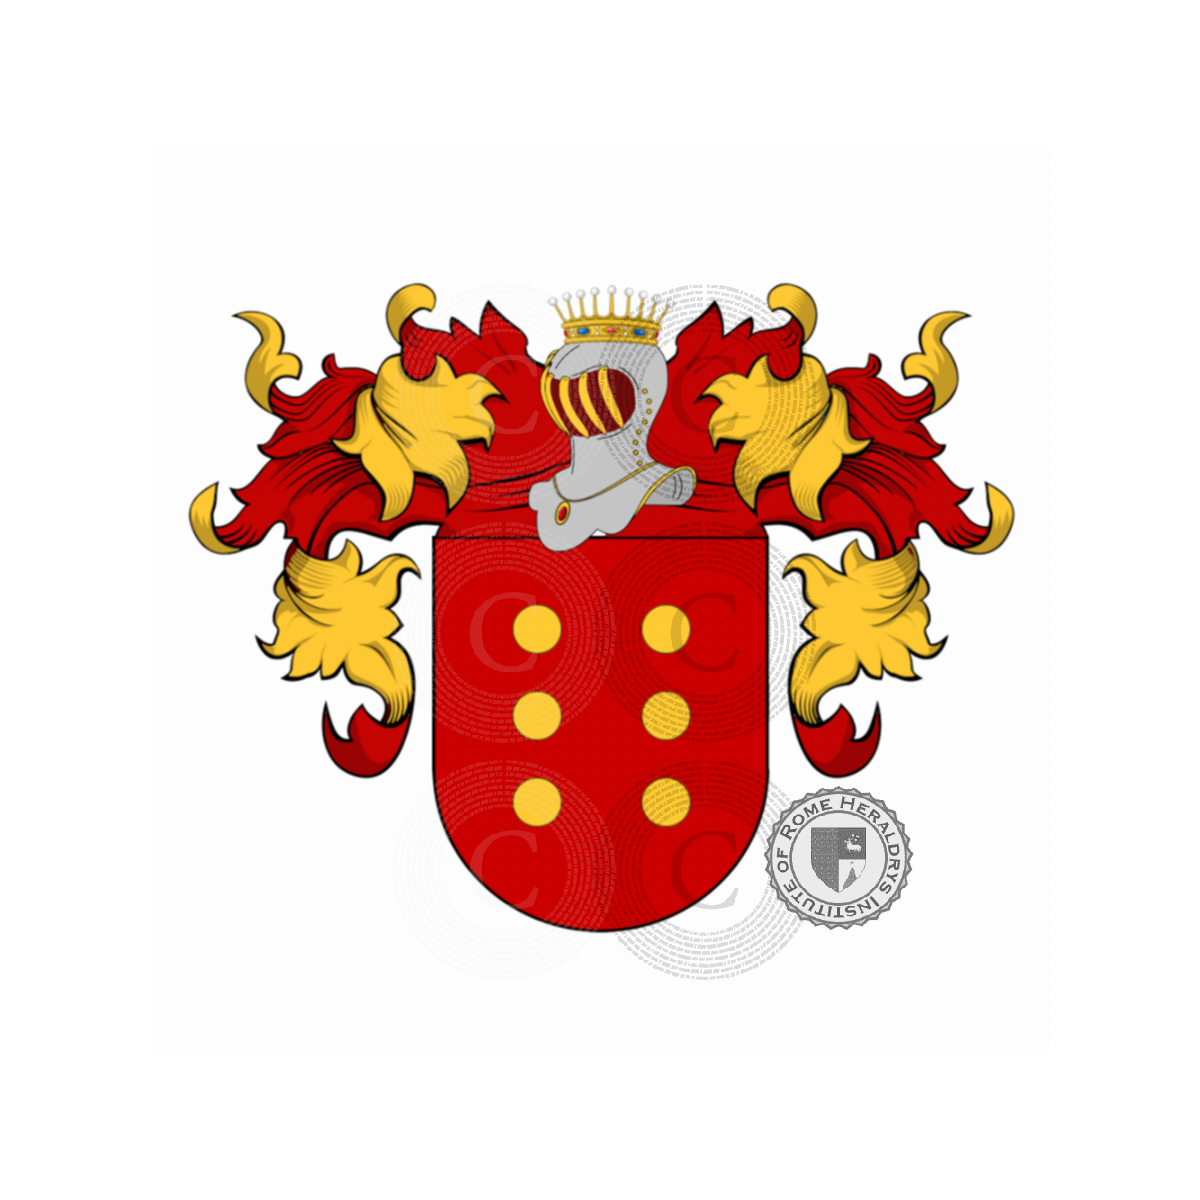 Coat of arms of familyAlmeida